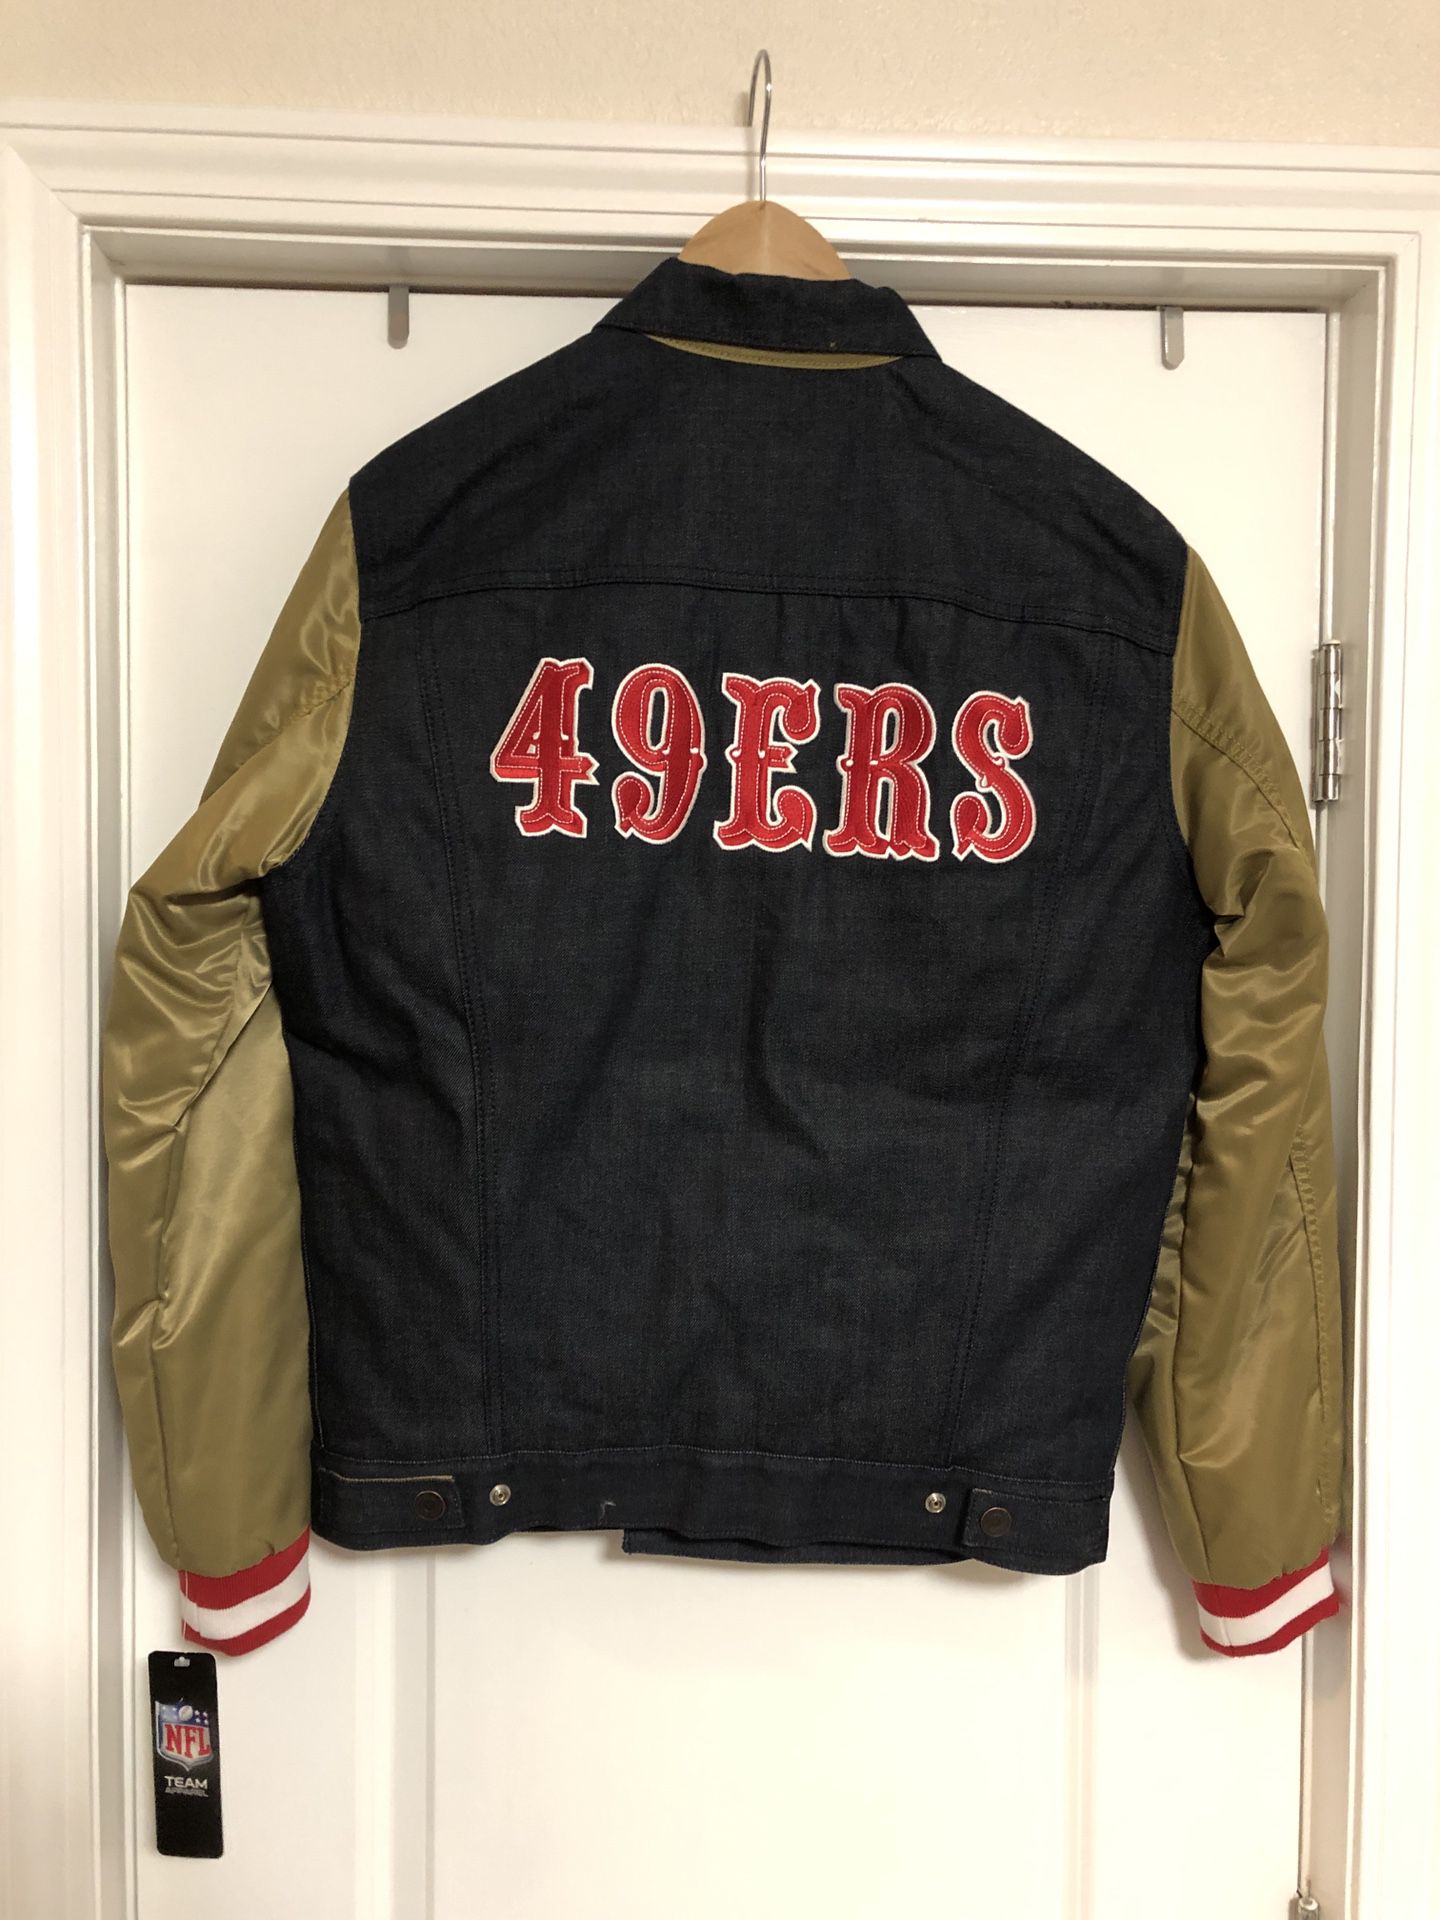 San Francisco 49ers Levi's Sports Denim Trucker Jacket - Blue